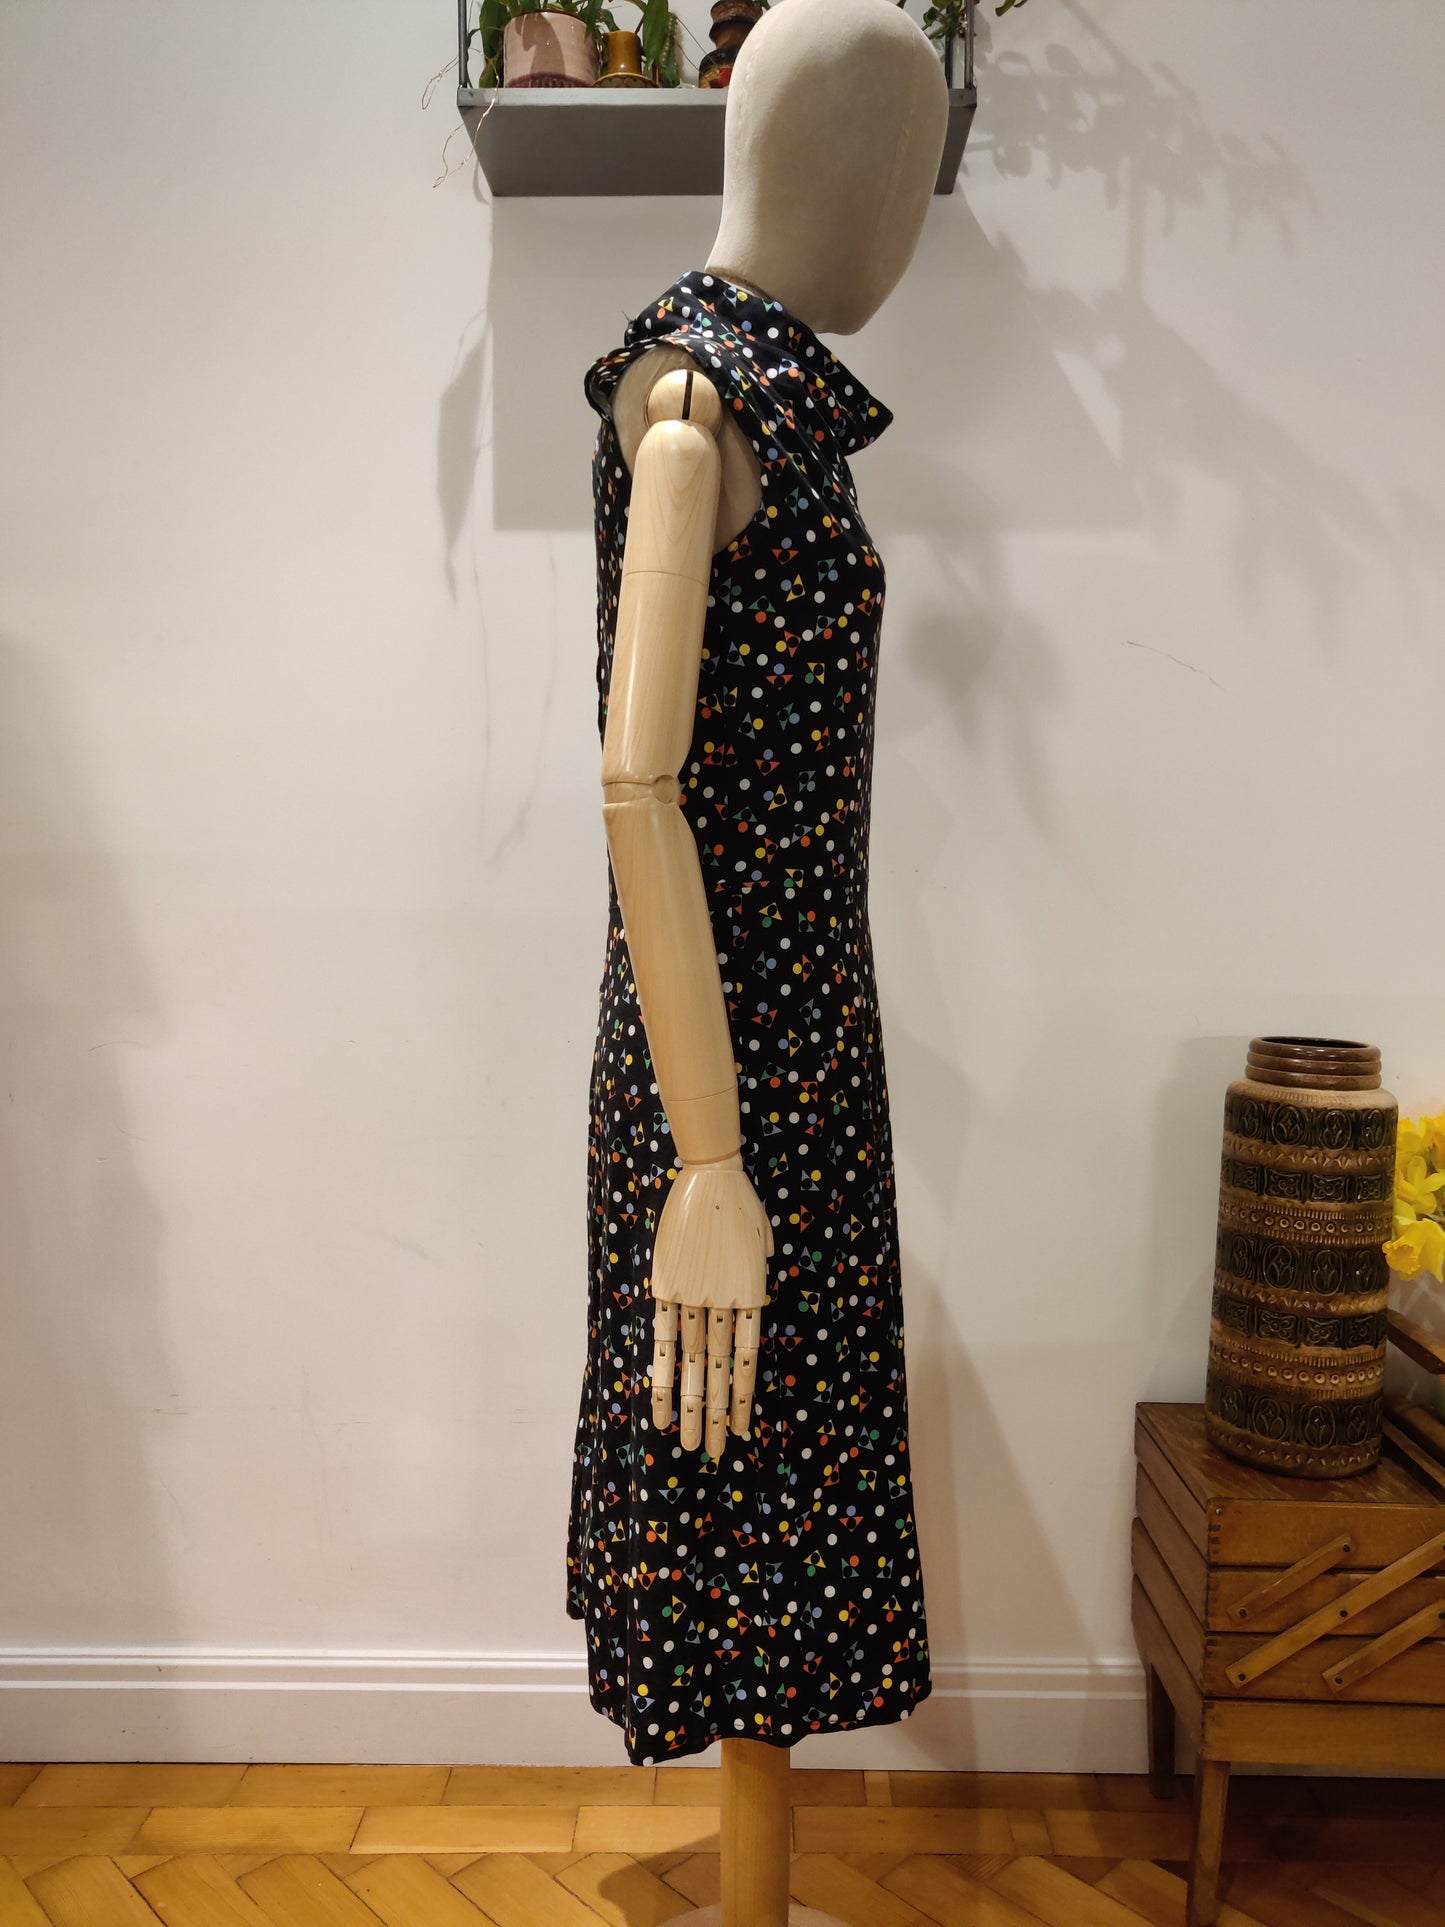 Fun vintage sleeveless dress 8-10